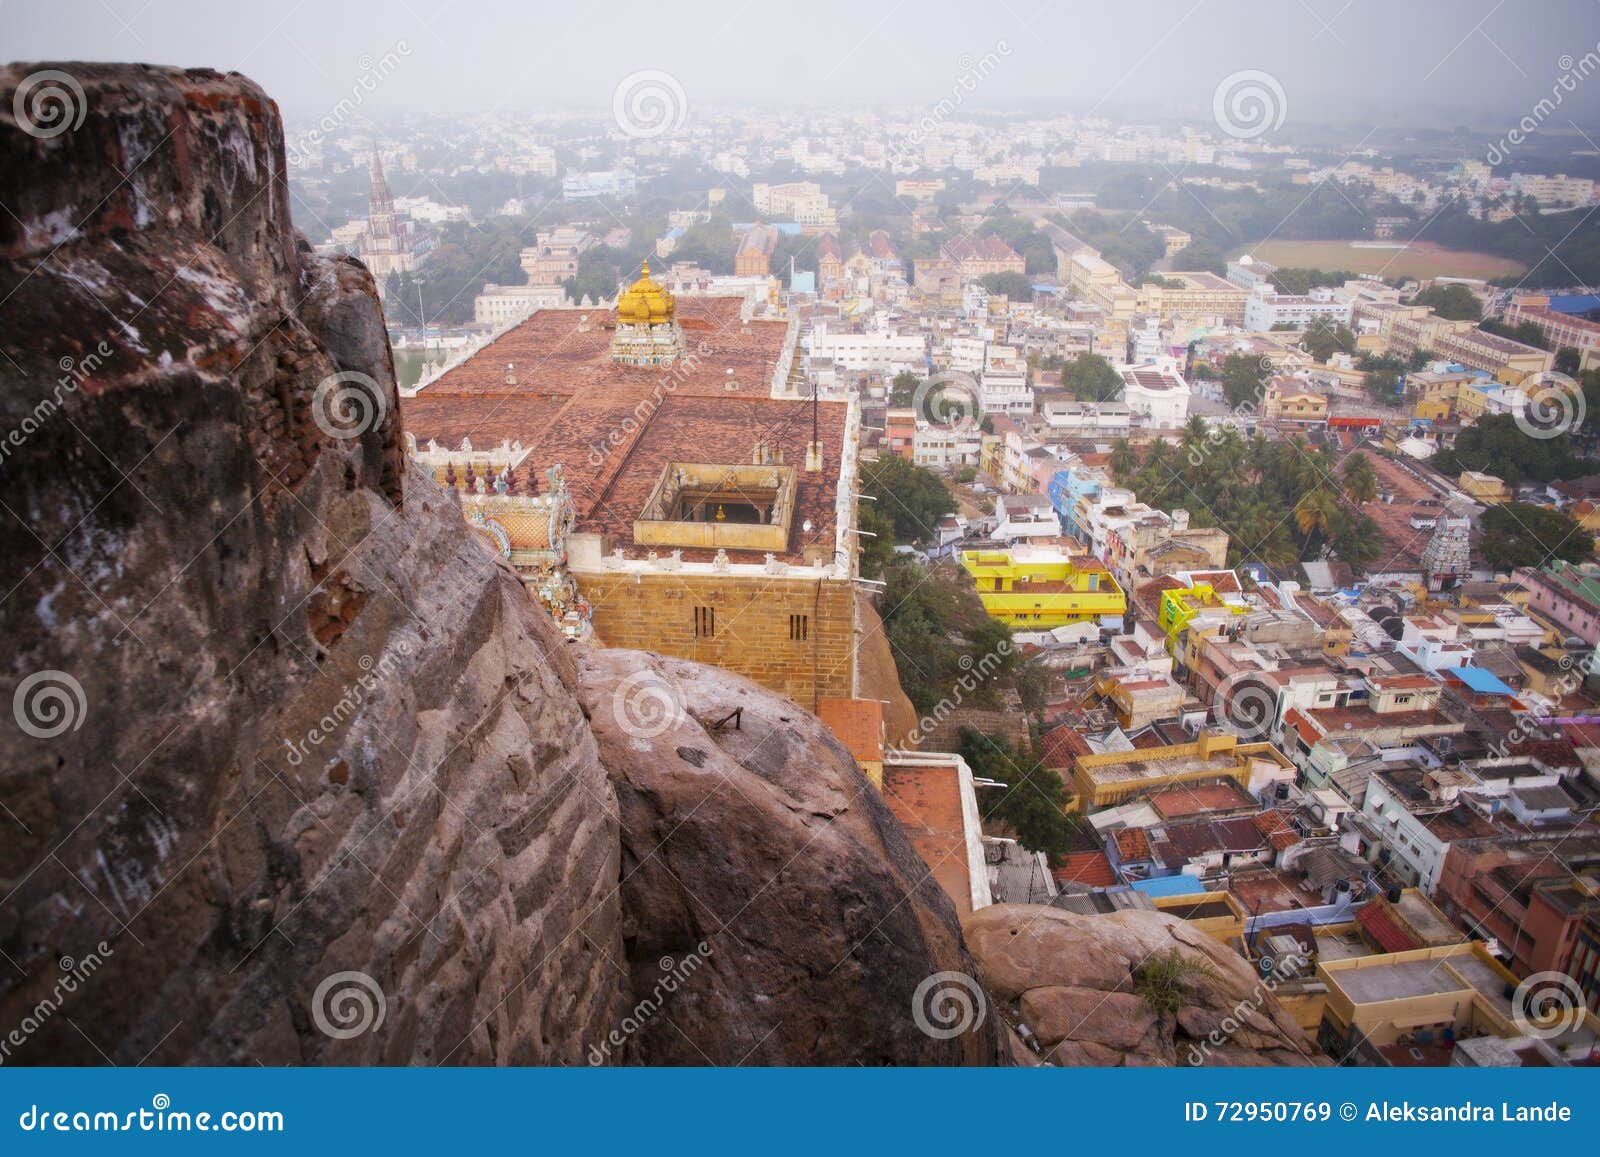 Famous Rockfort Ucchi Pillayar Temple Stock Image - Image of rock ...